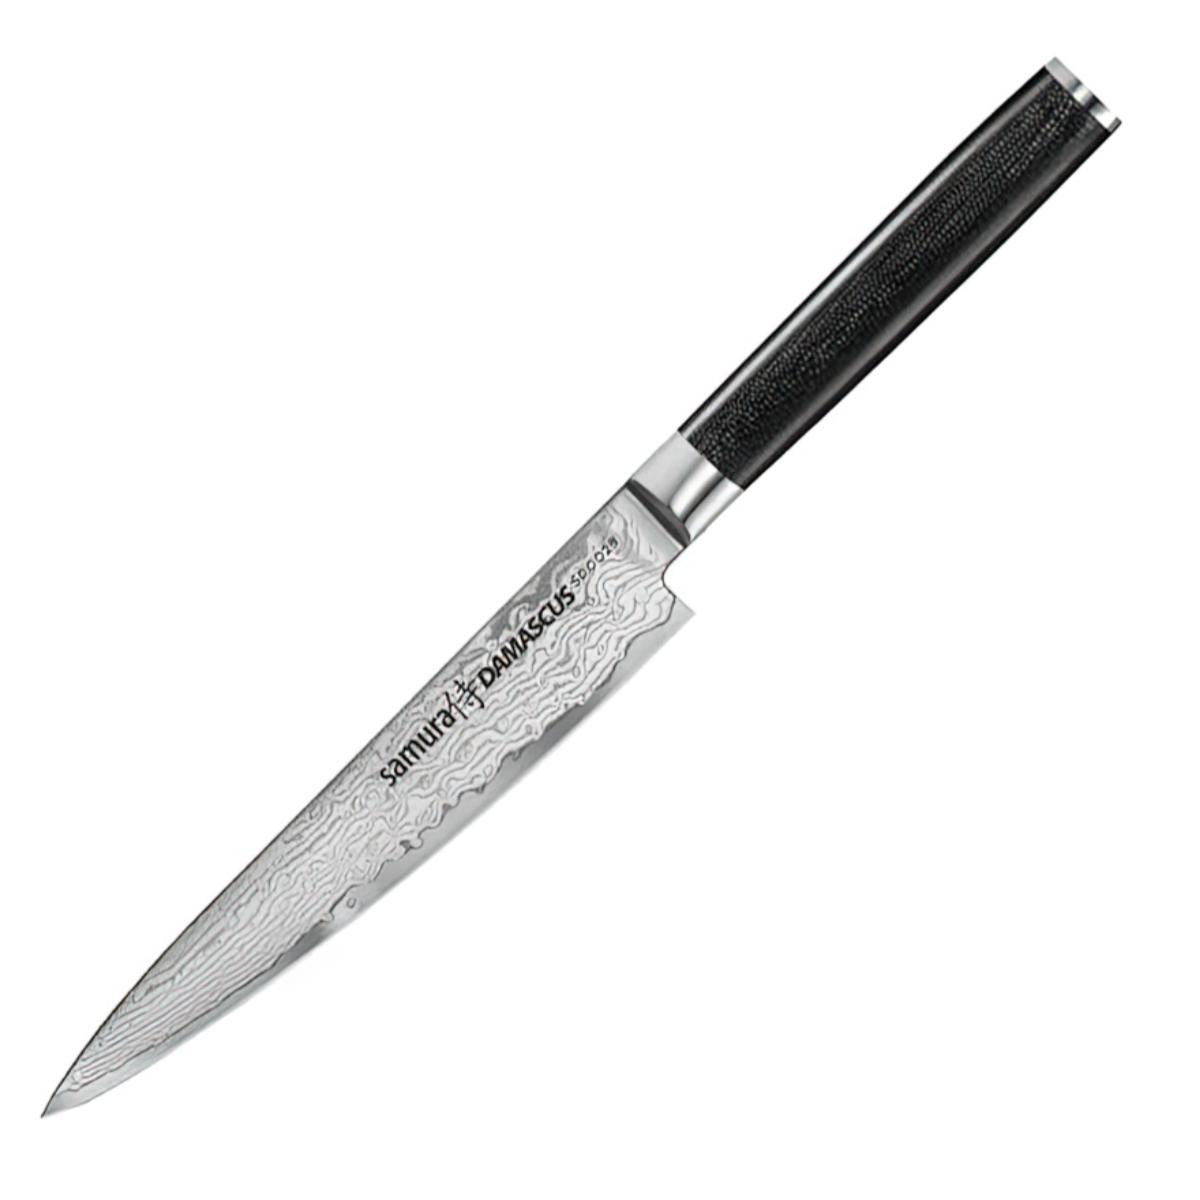 Samura Damascus nóż utility / uniwersalny 150mm